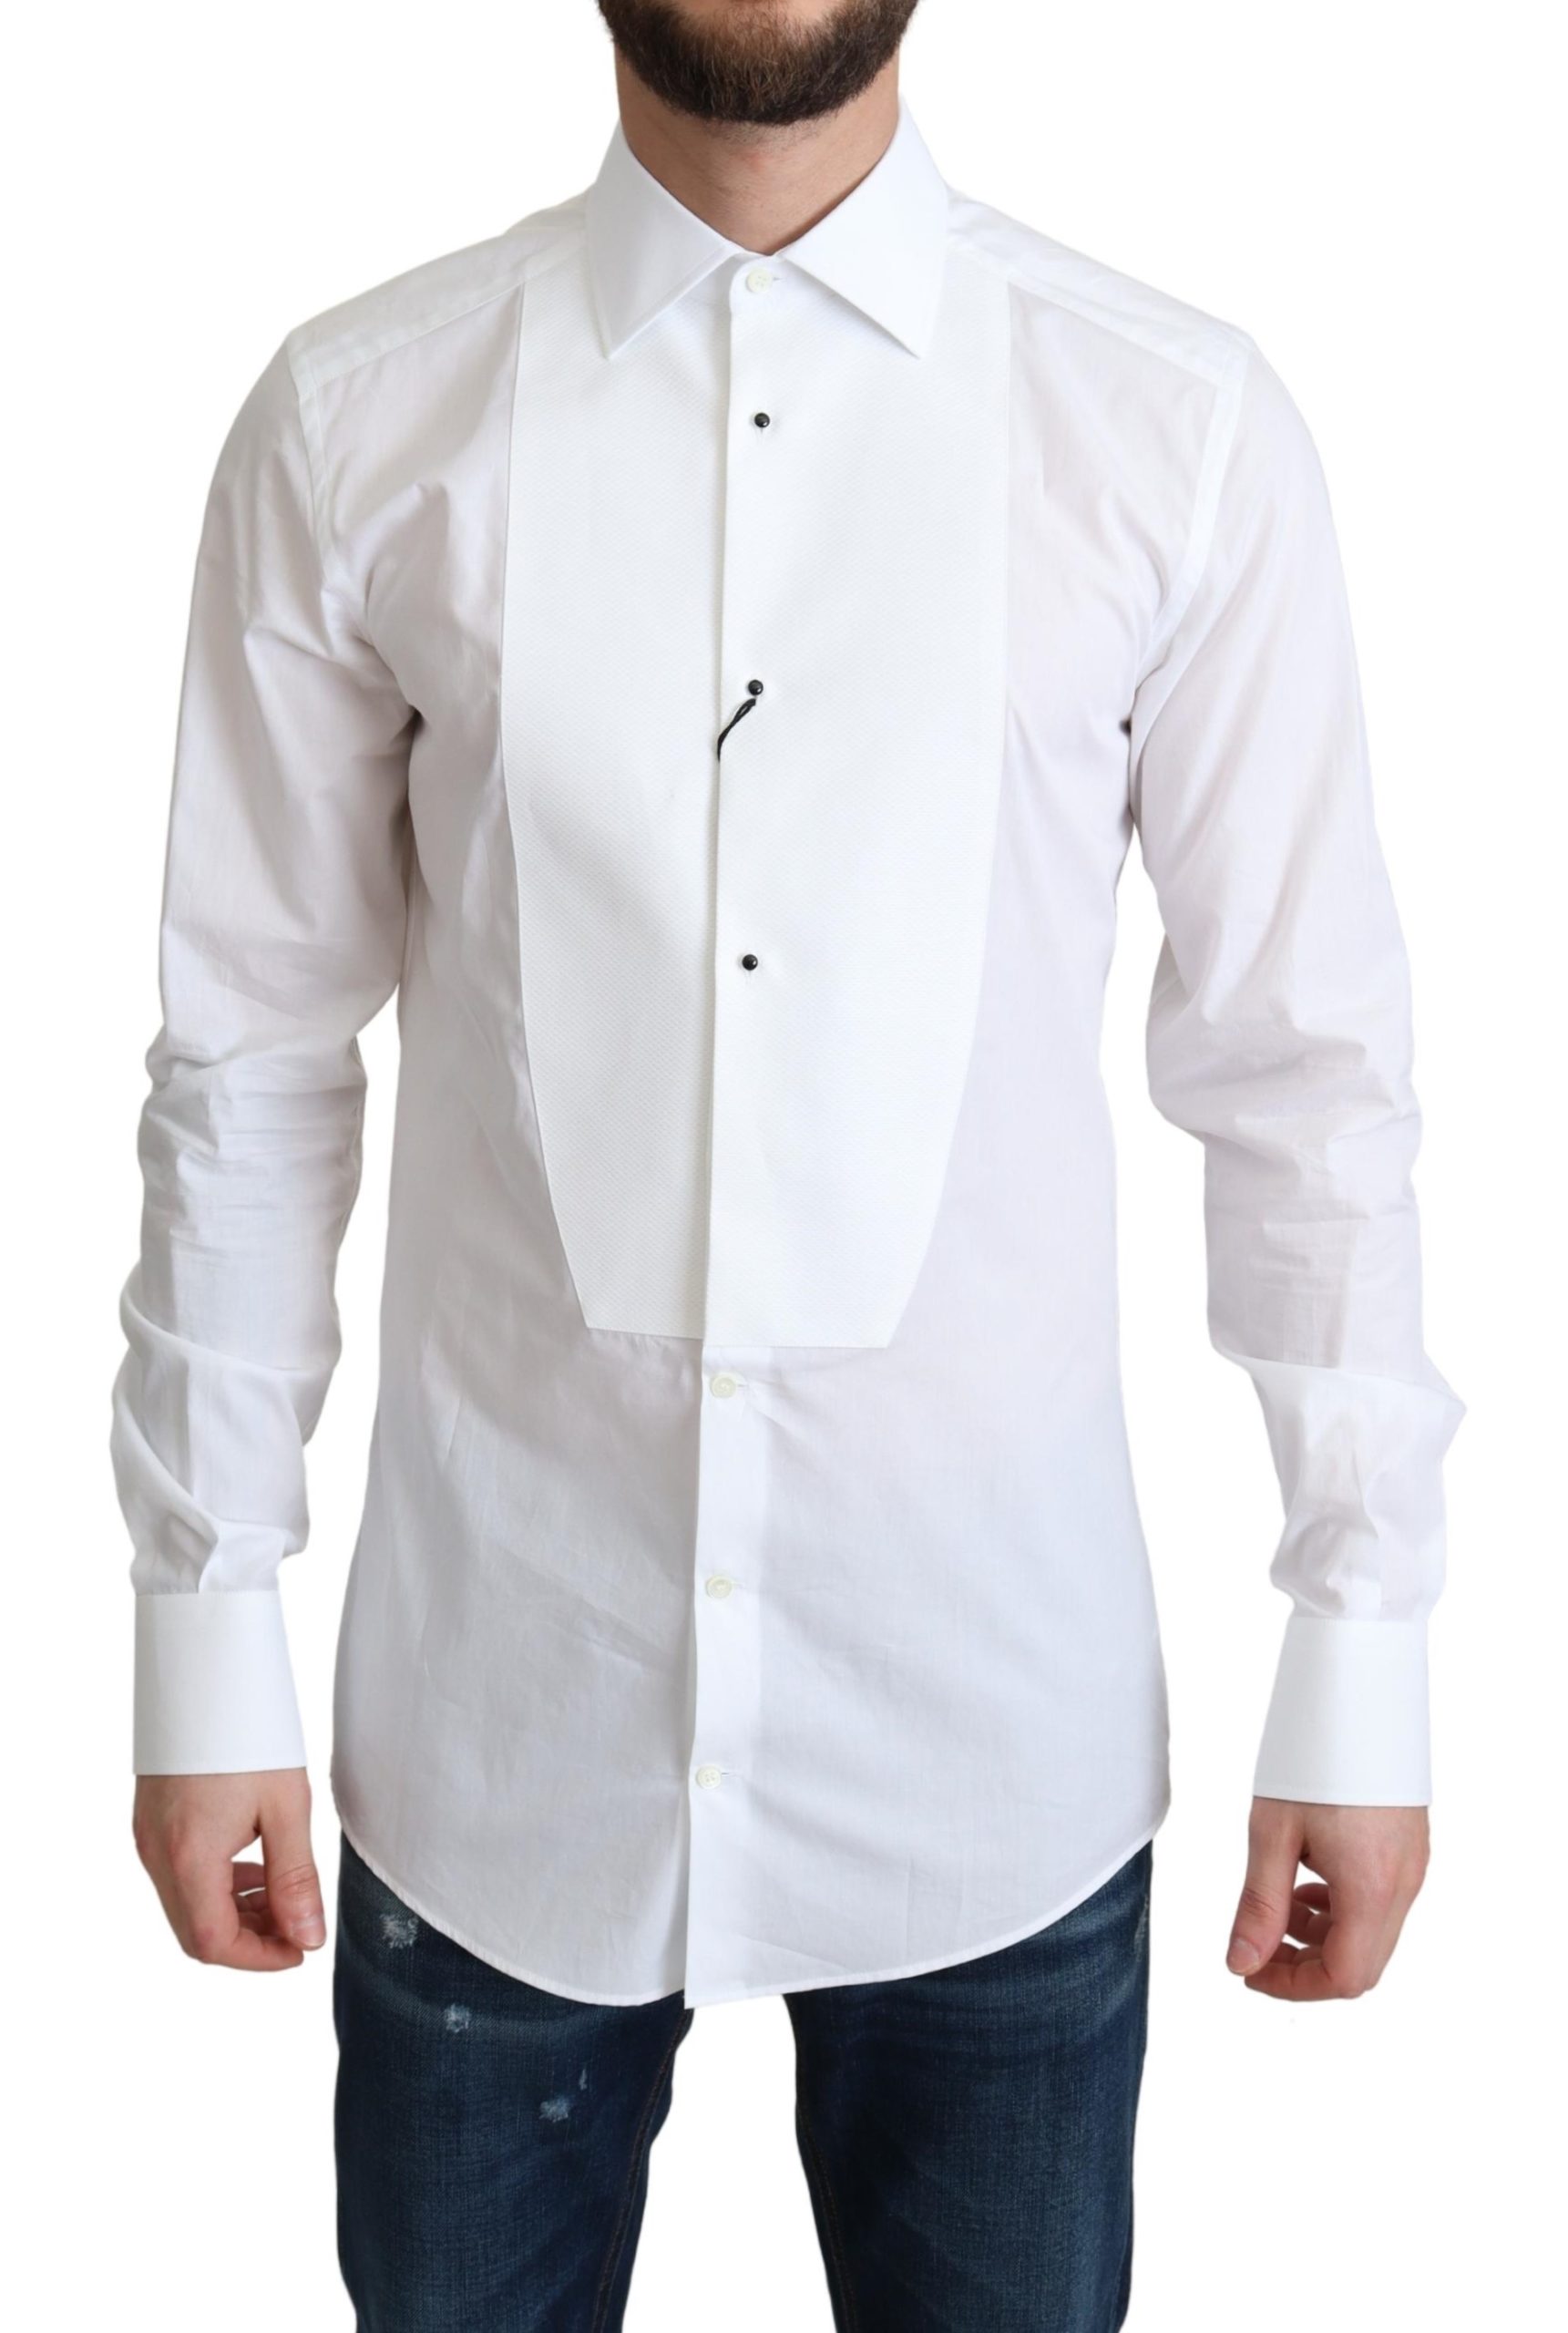 Dolce & Gabbana White Bib Cotton Poplin Men Formal Shirt • Fashion ...